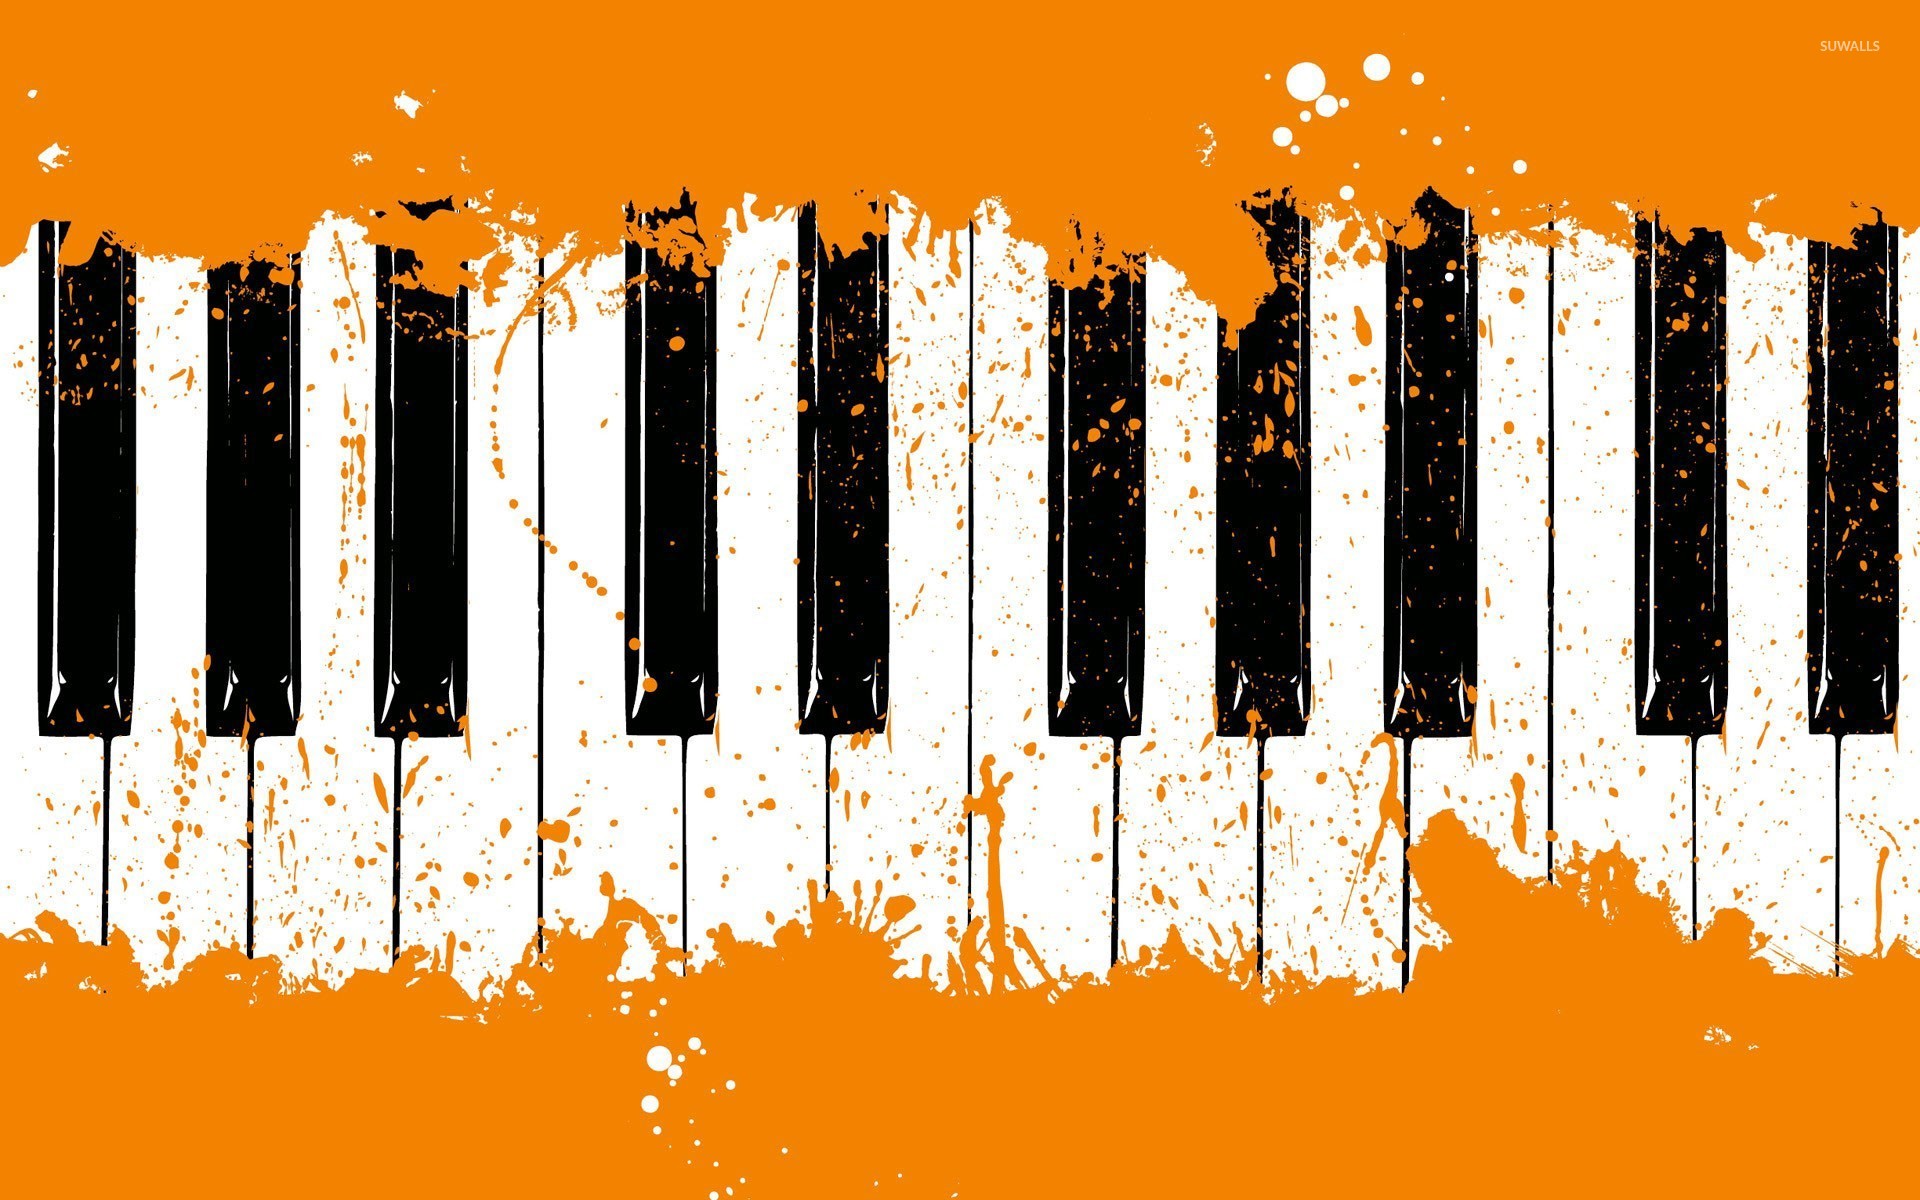 Piano keyboard wallpaper   Digital Art wallpapers   21116